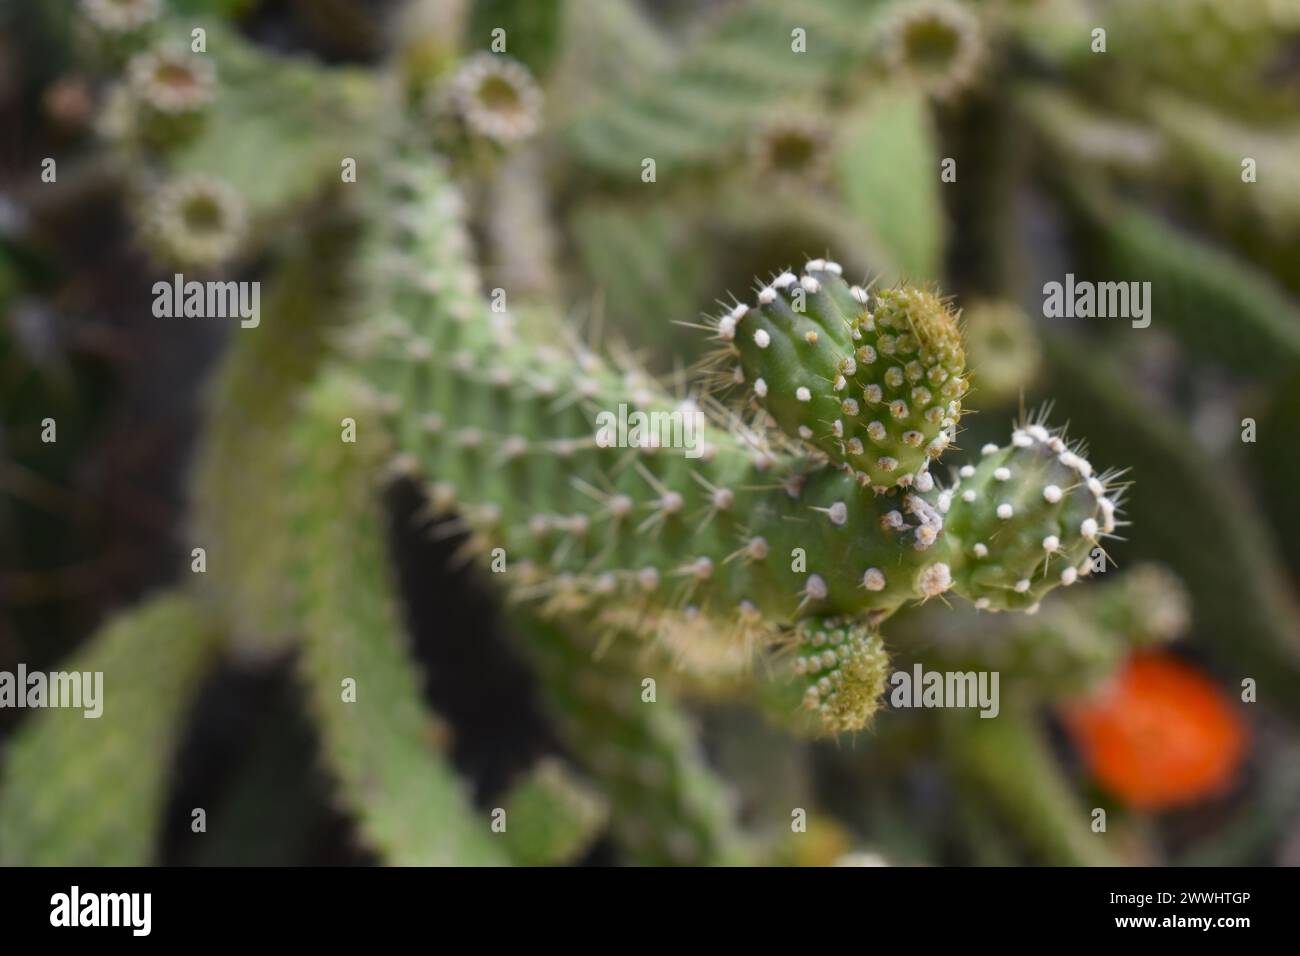 Planta Cactus verde con espinas. Stock Photo